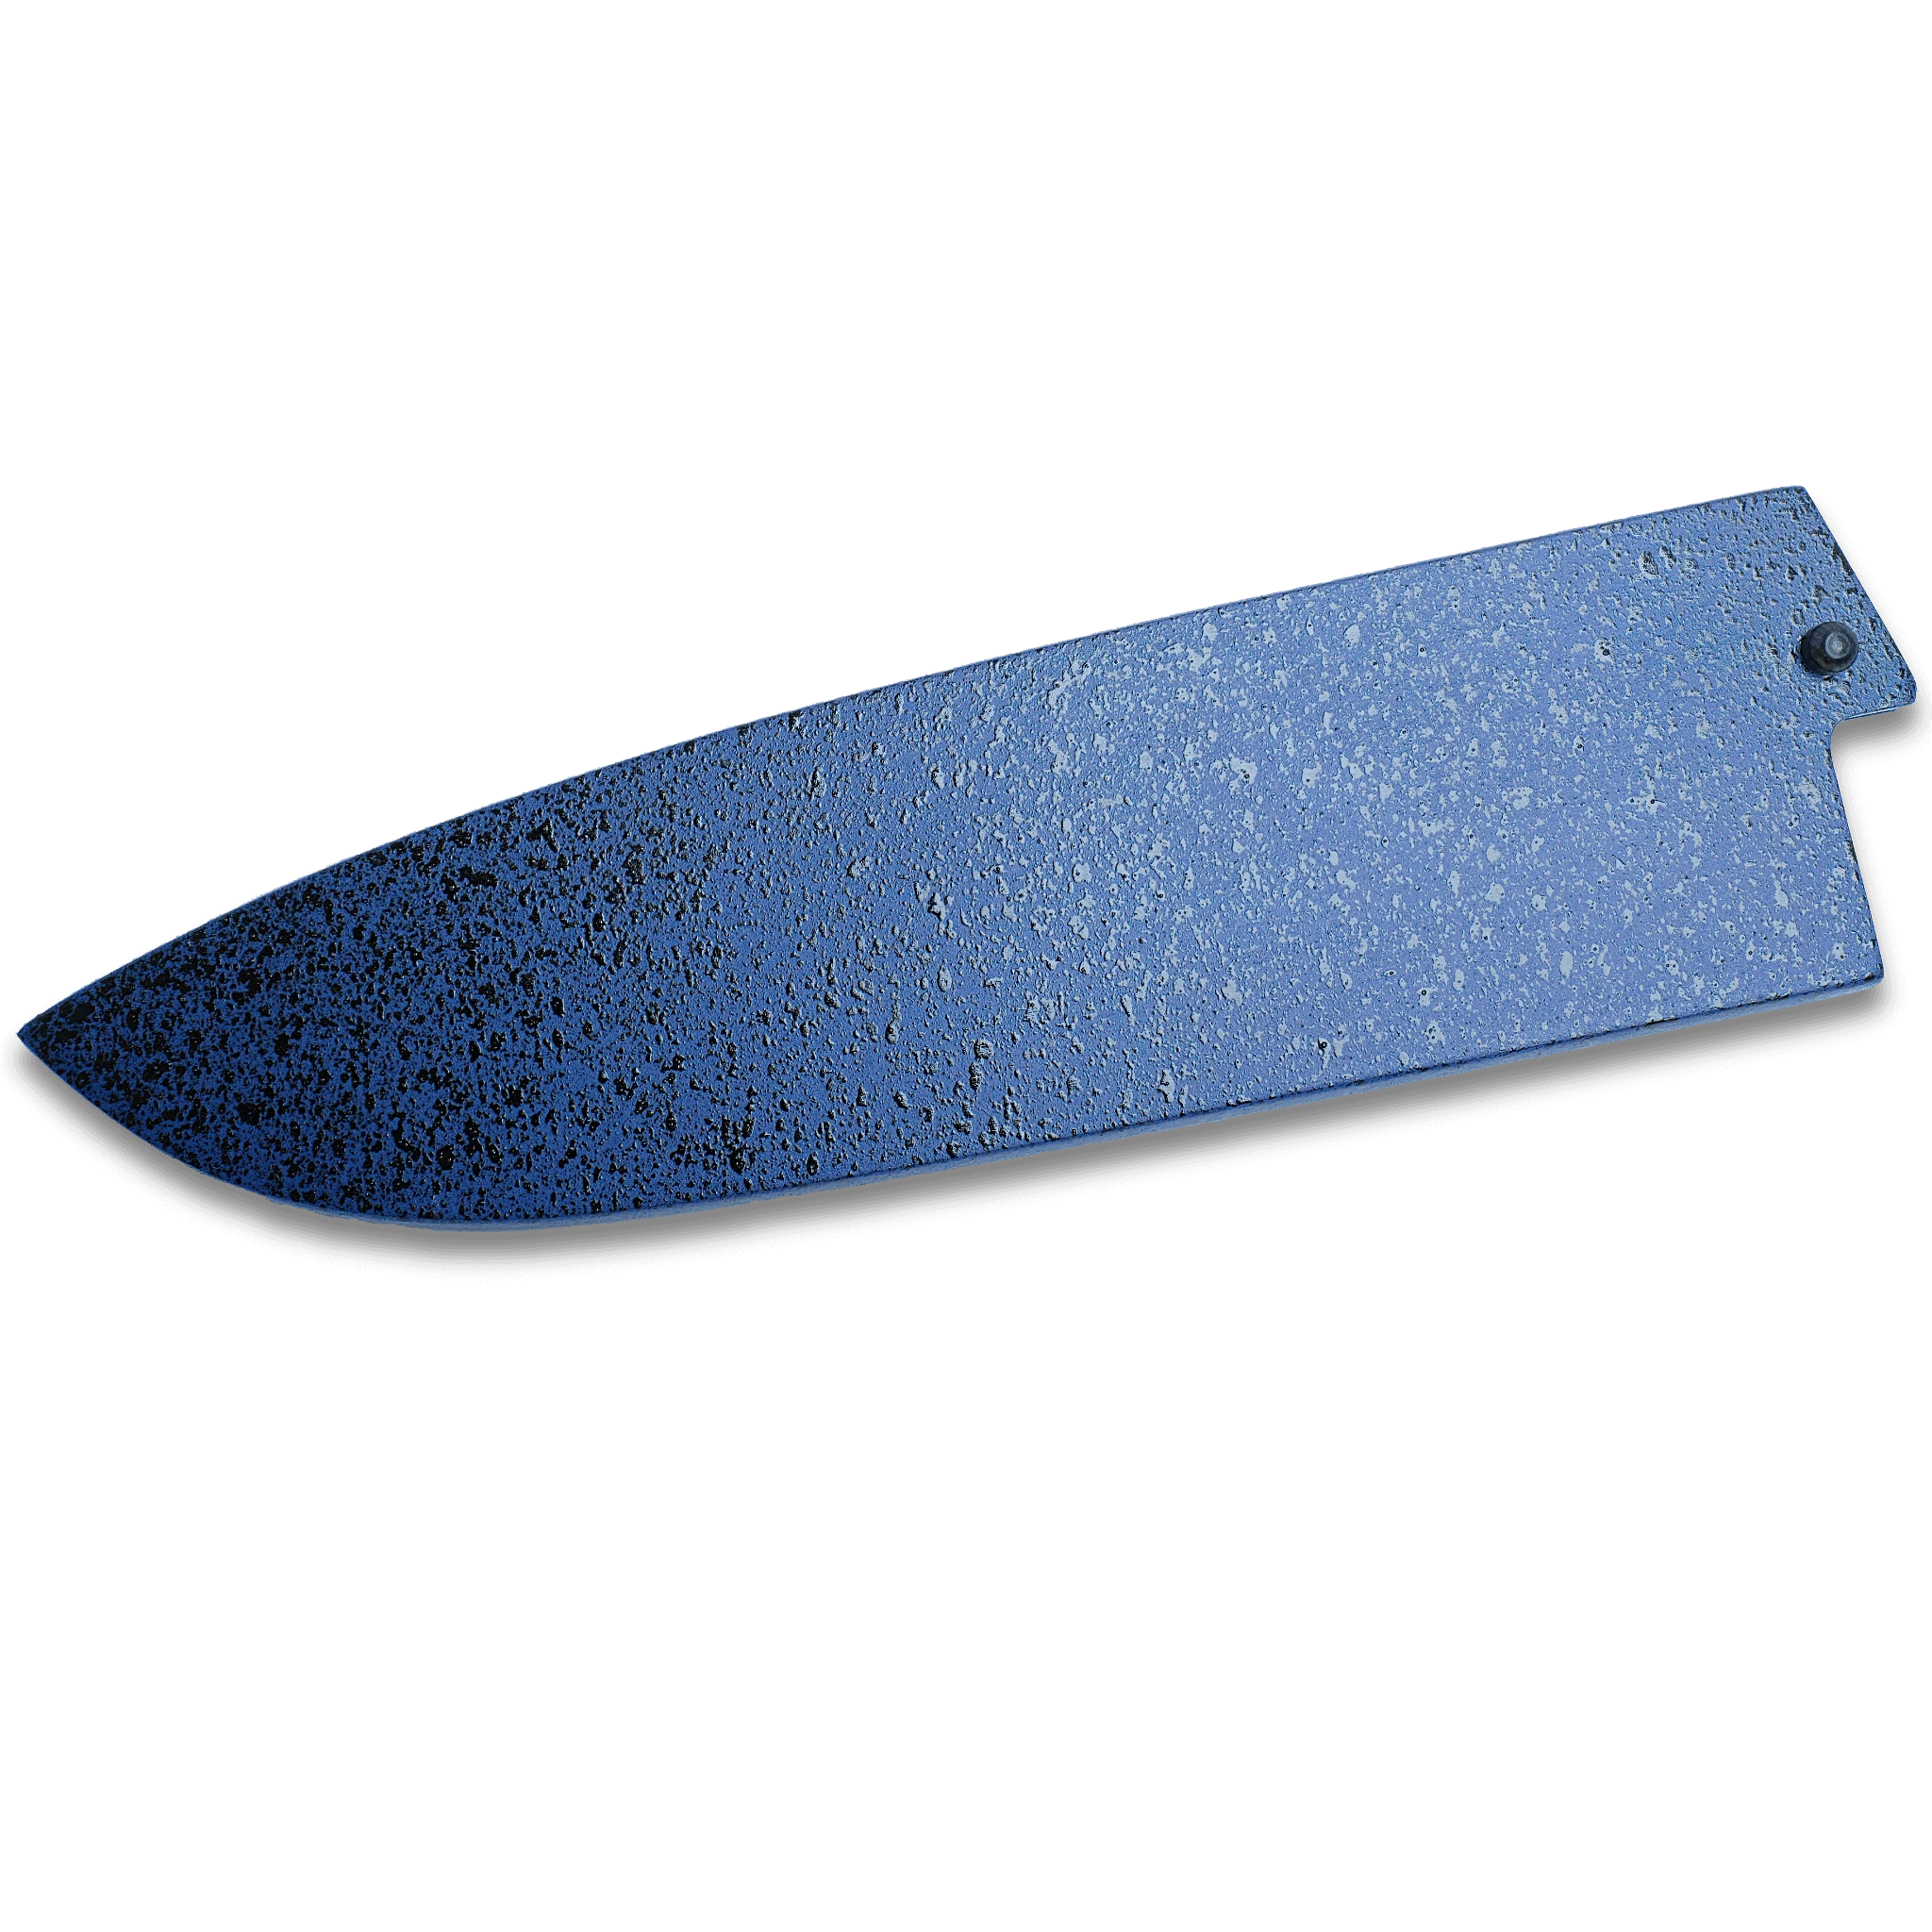 Sheath / Saya Ho Wood (Magnolia) for 180mm Santoku Knife